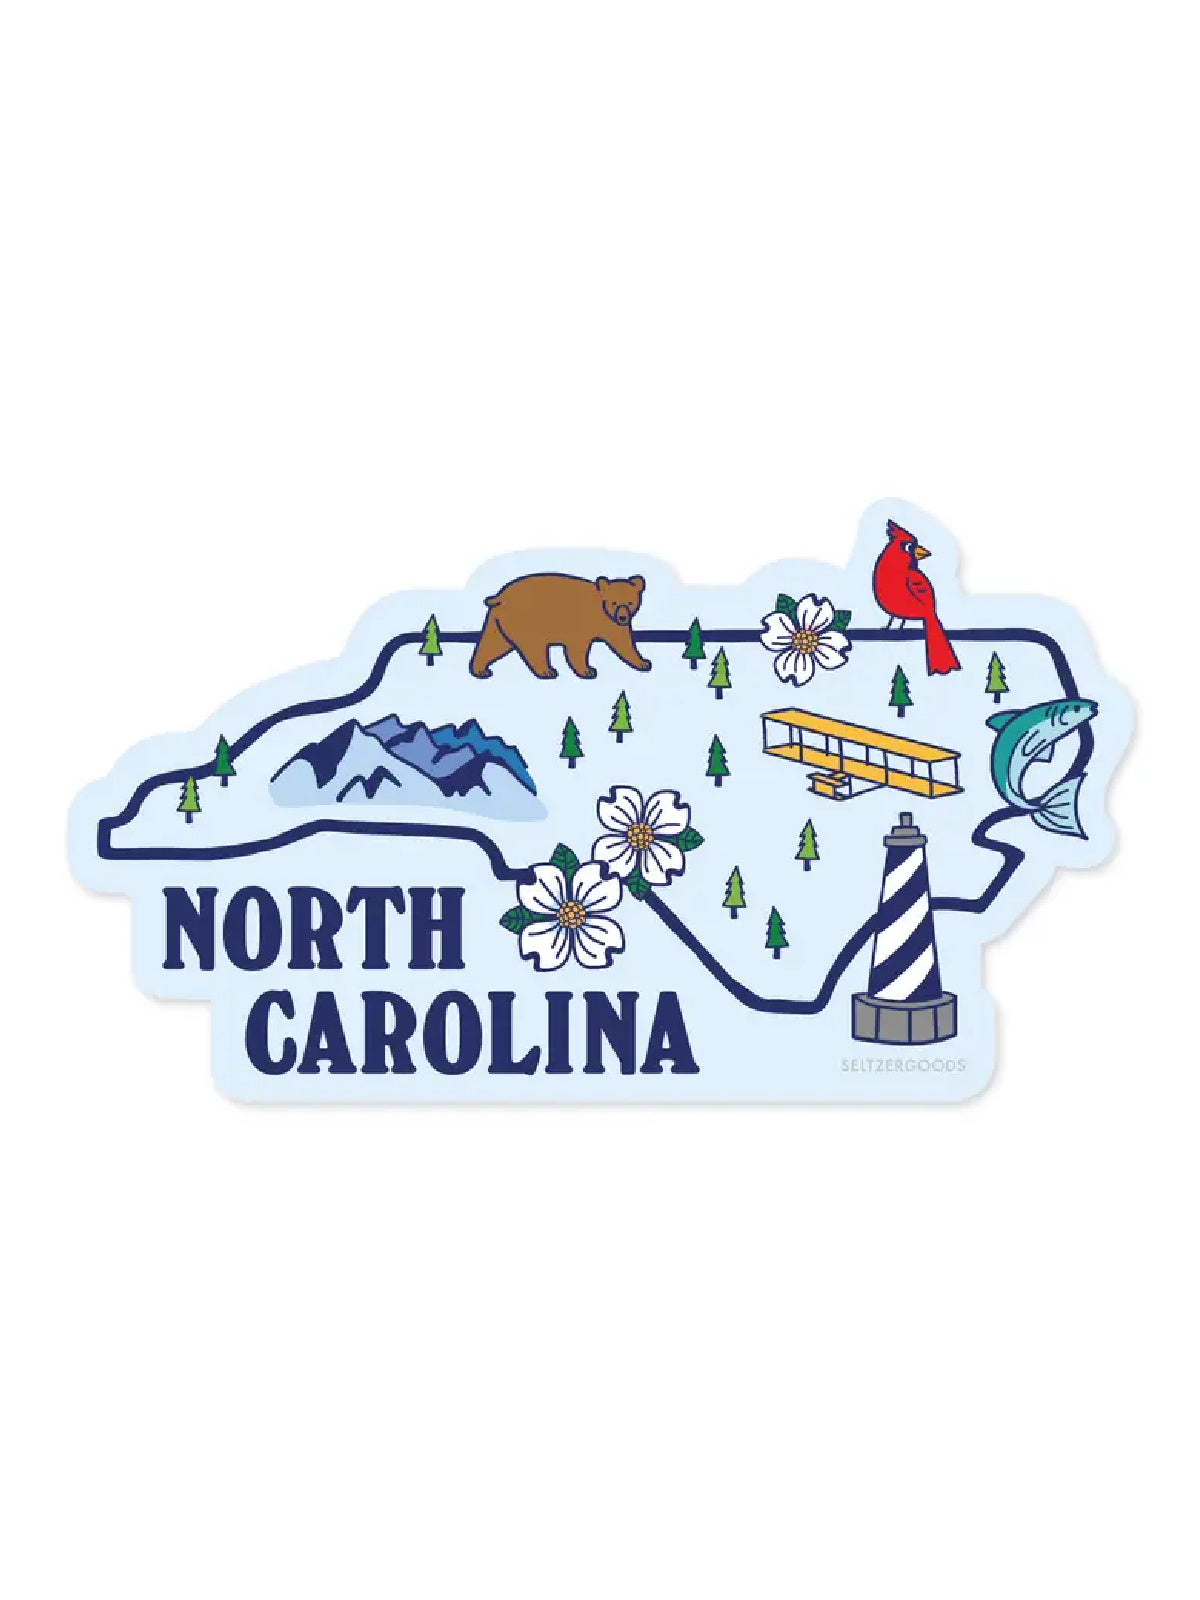 Carolina Fishing Stickers for Sale